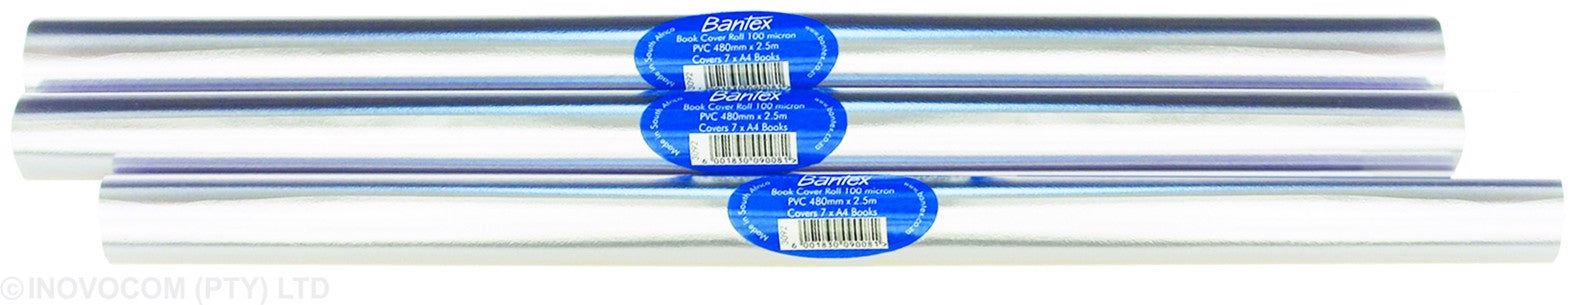 Bantex PVC Book Cover Roll 480mm x 2.5m 100mic Medium Duty